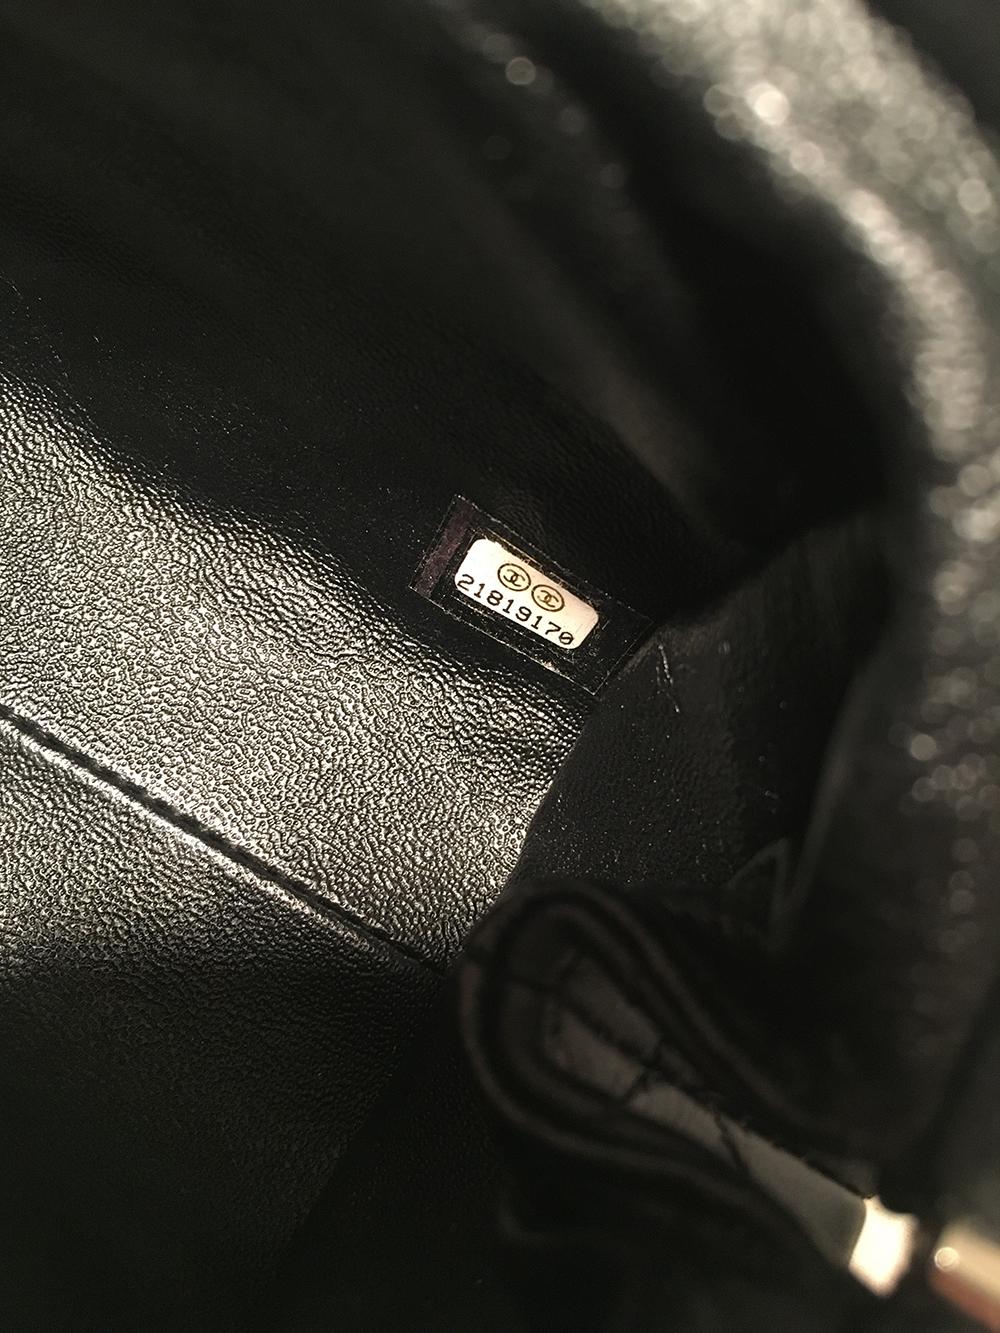 Chanel Mini Black Patent Leather Kiss lock Shoulder Bag 2